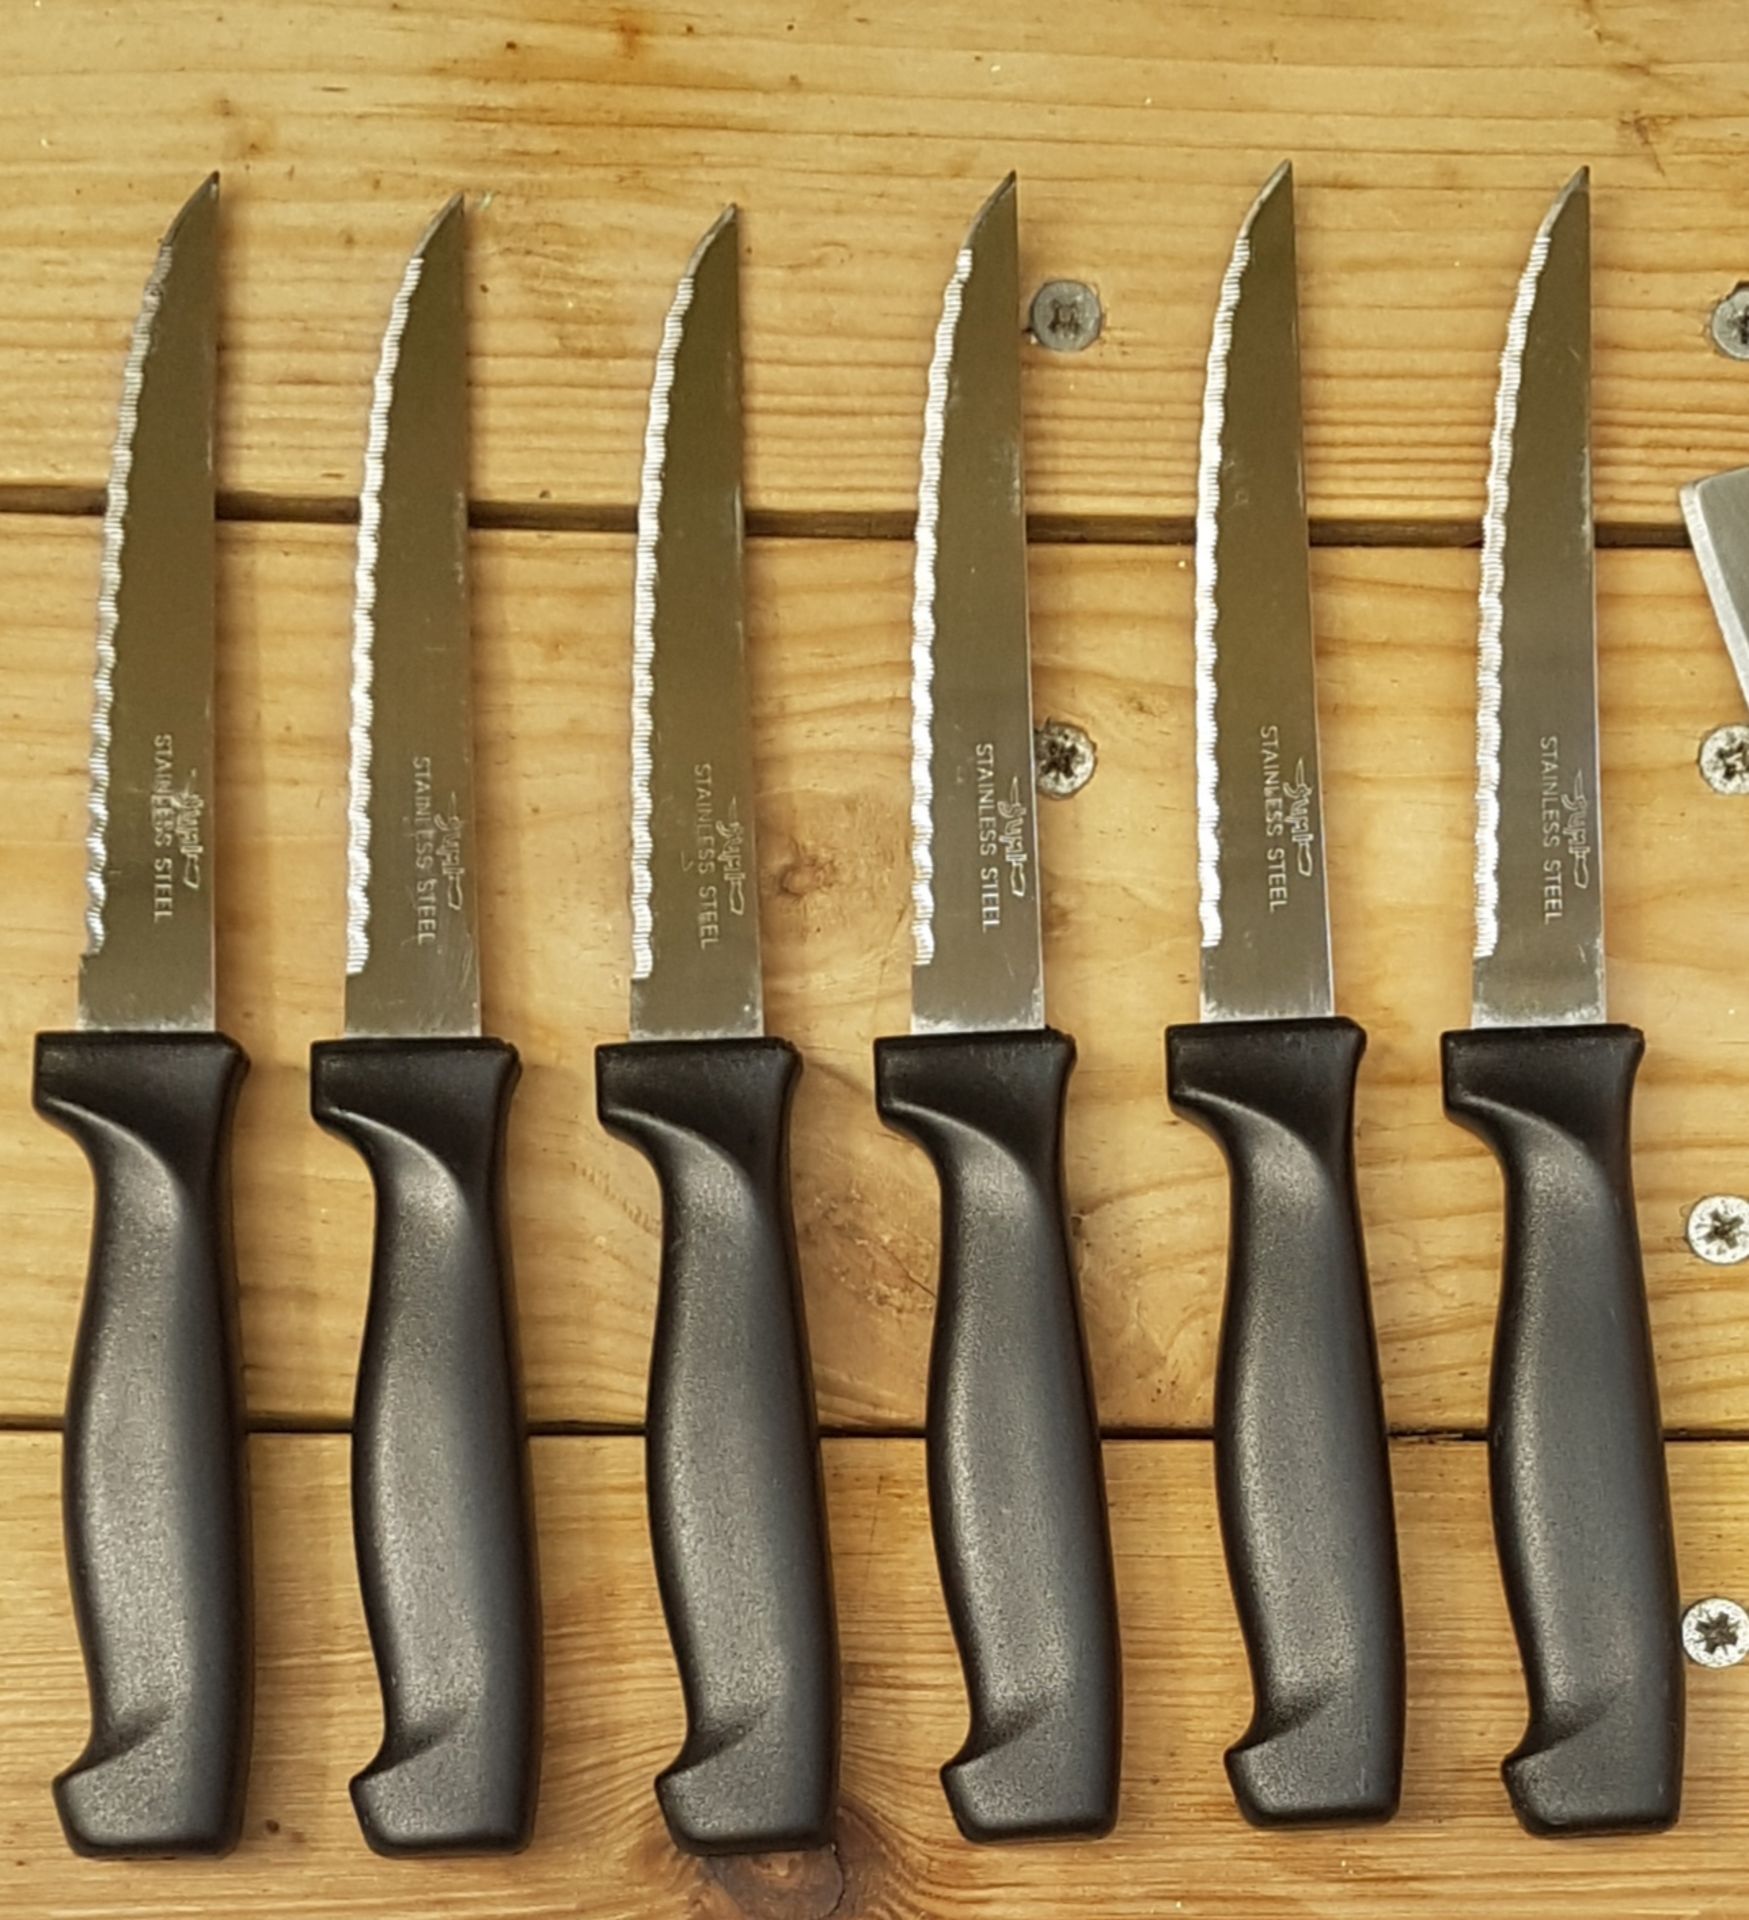 100 SETS OF 12 KNIVES, MADE UP OF 6 STEAK KNIVES & 6 OTHER INDIVIDUAL KITCHEN KNIVES *NO VAT - Image 2 of 6